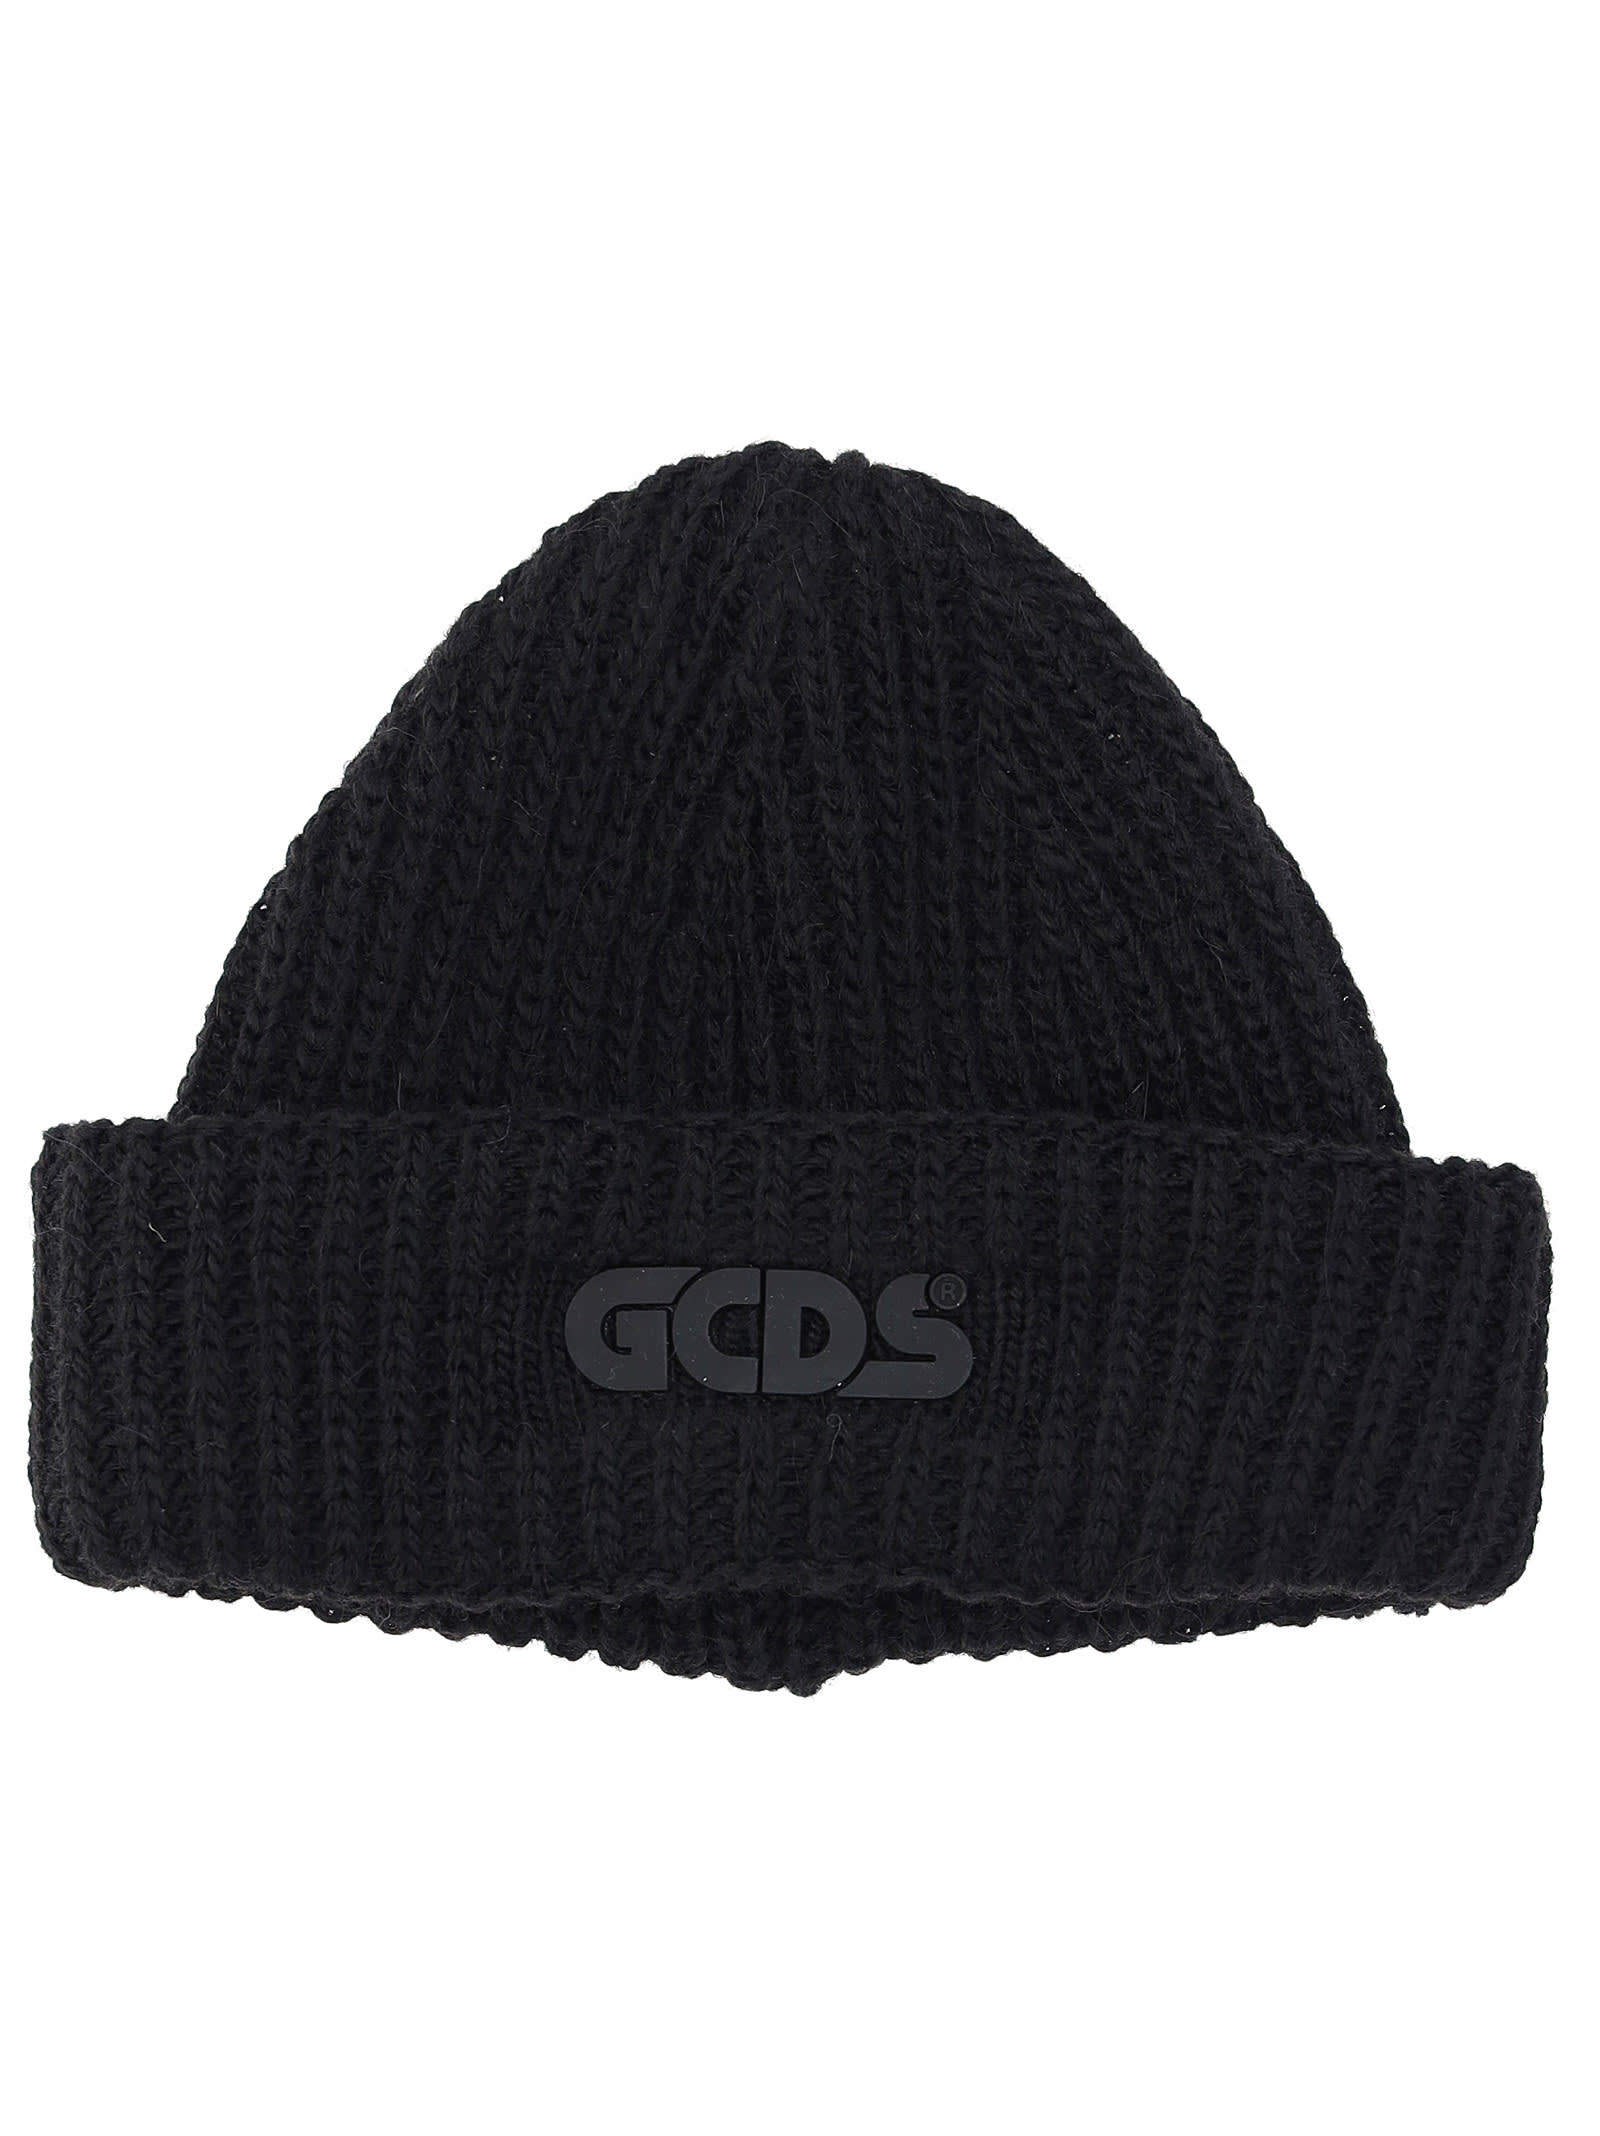 Gcds Beanie Hat